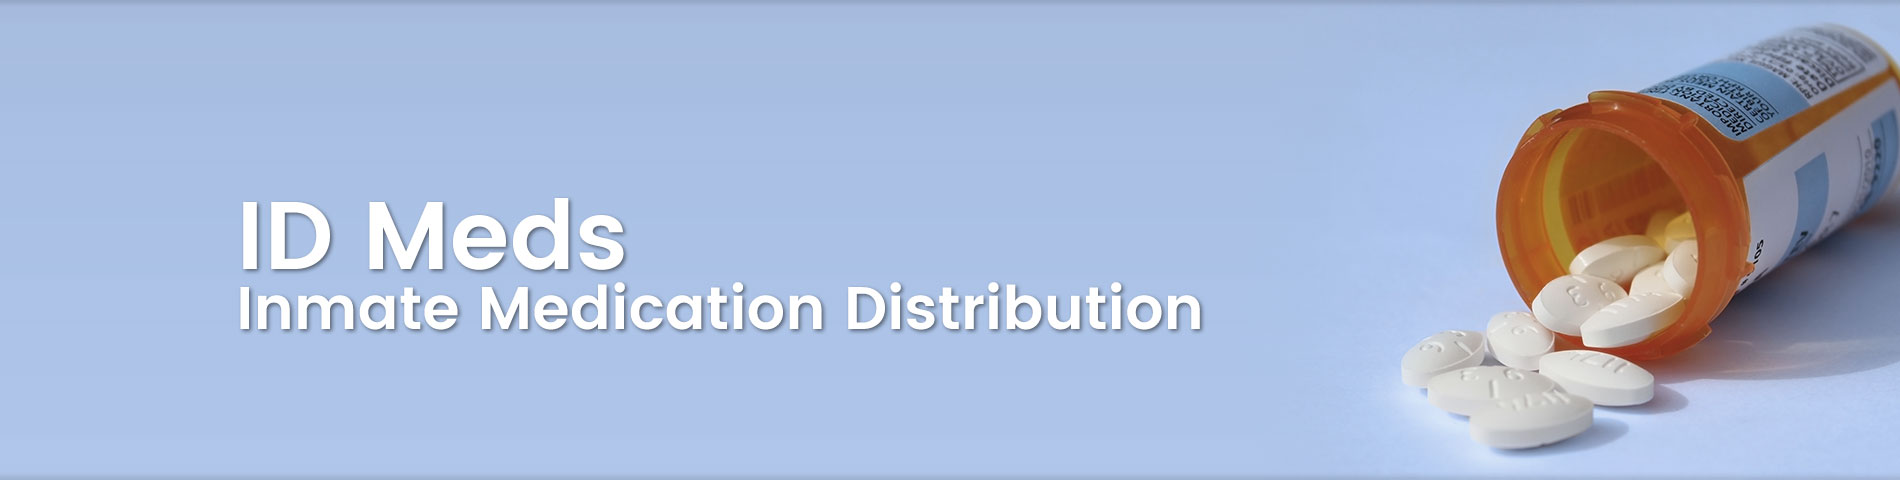 Inmate Medication Distribution Management